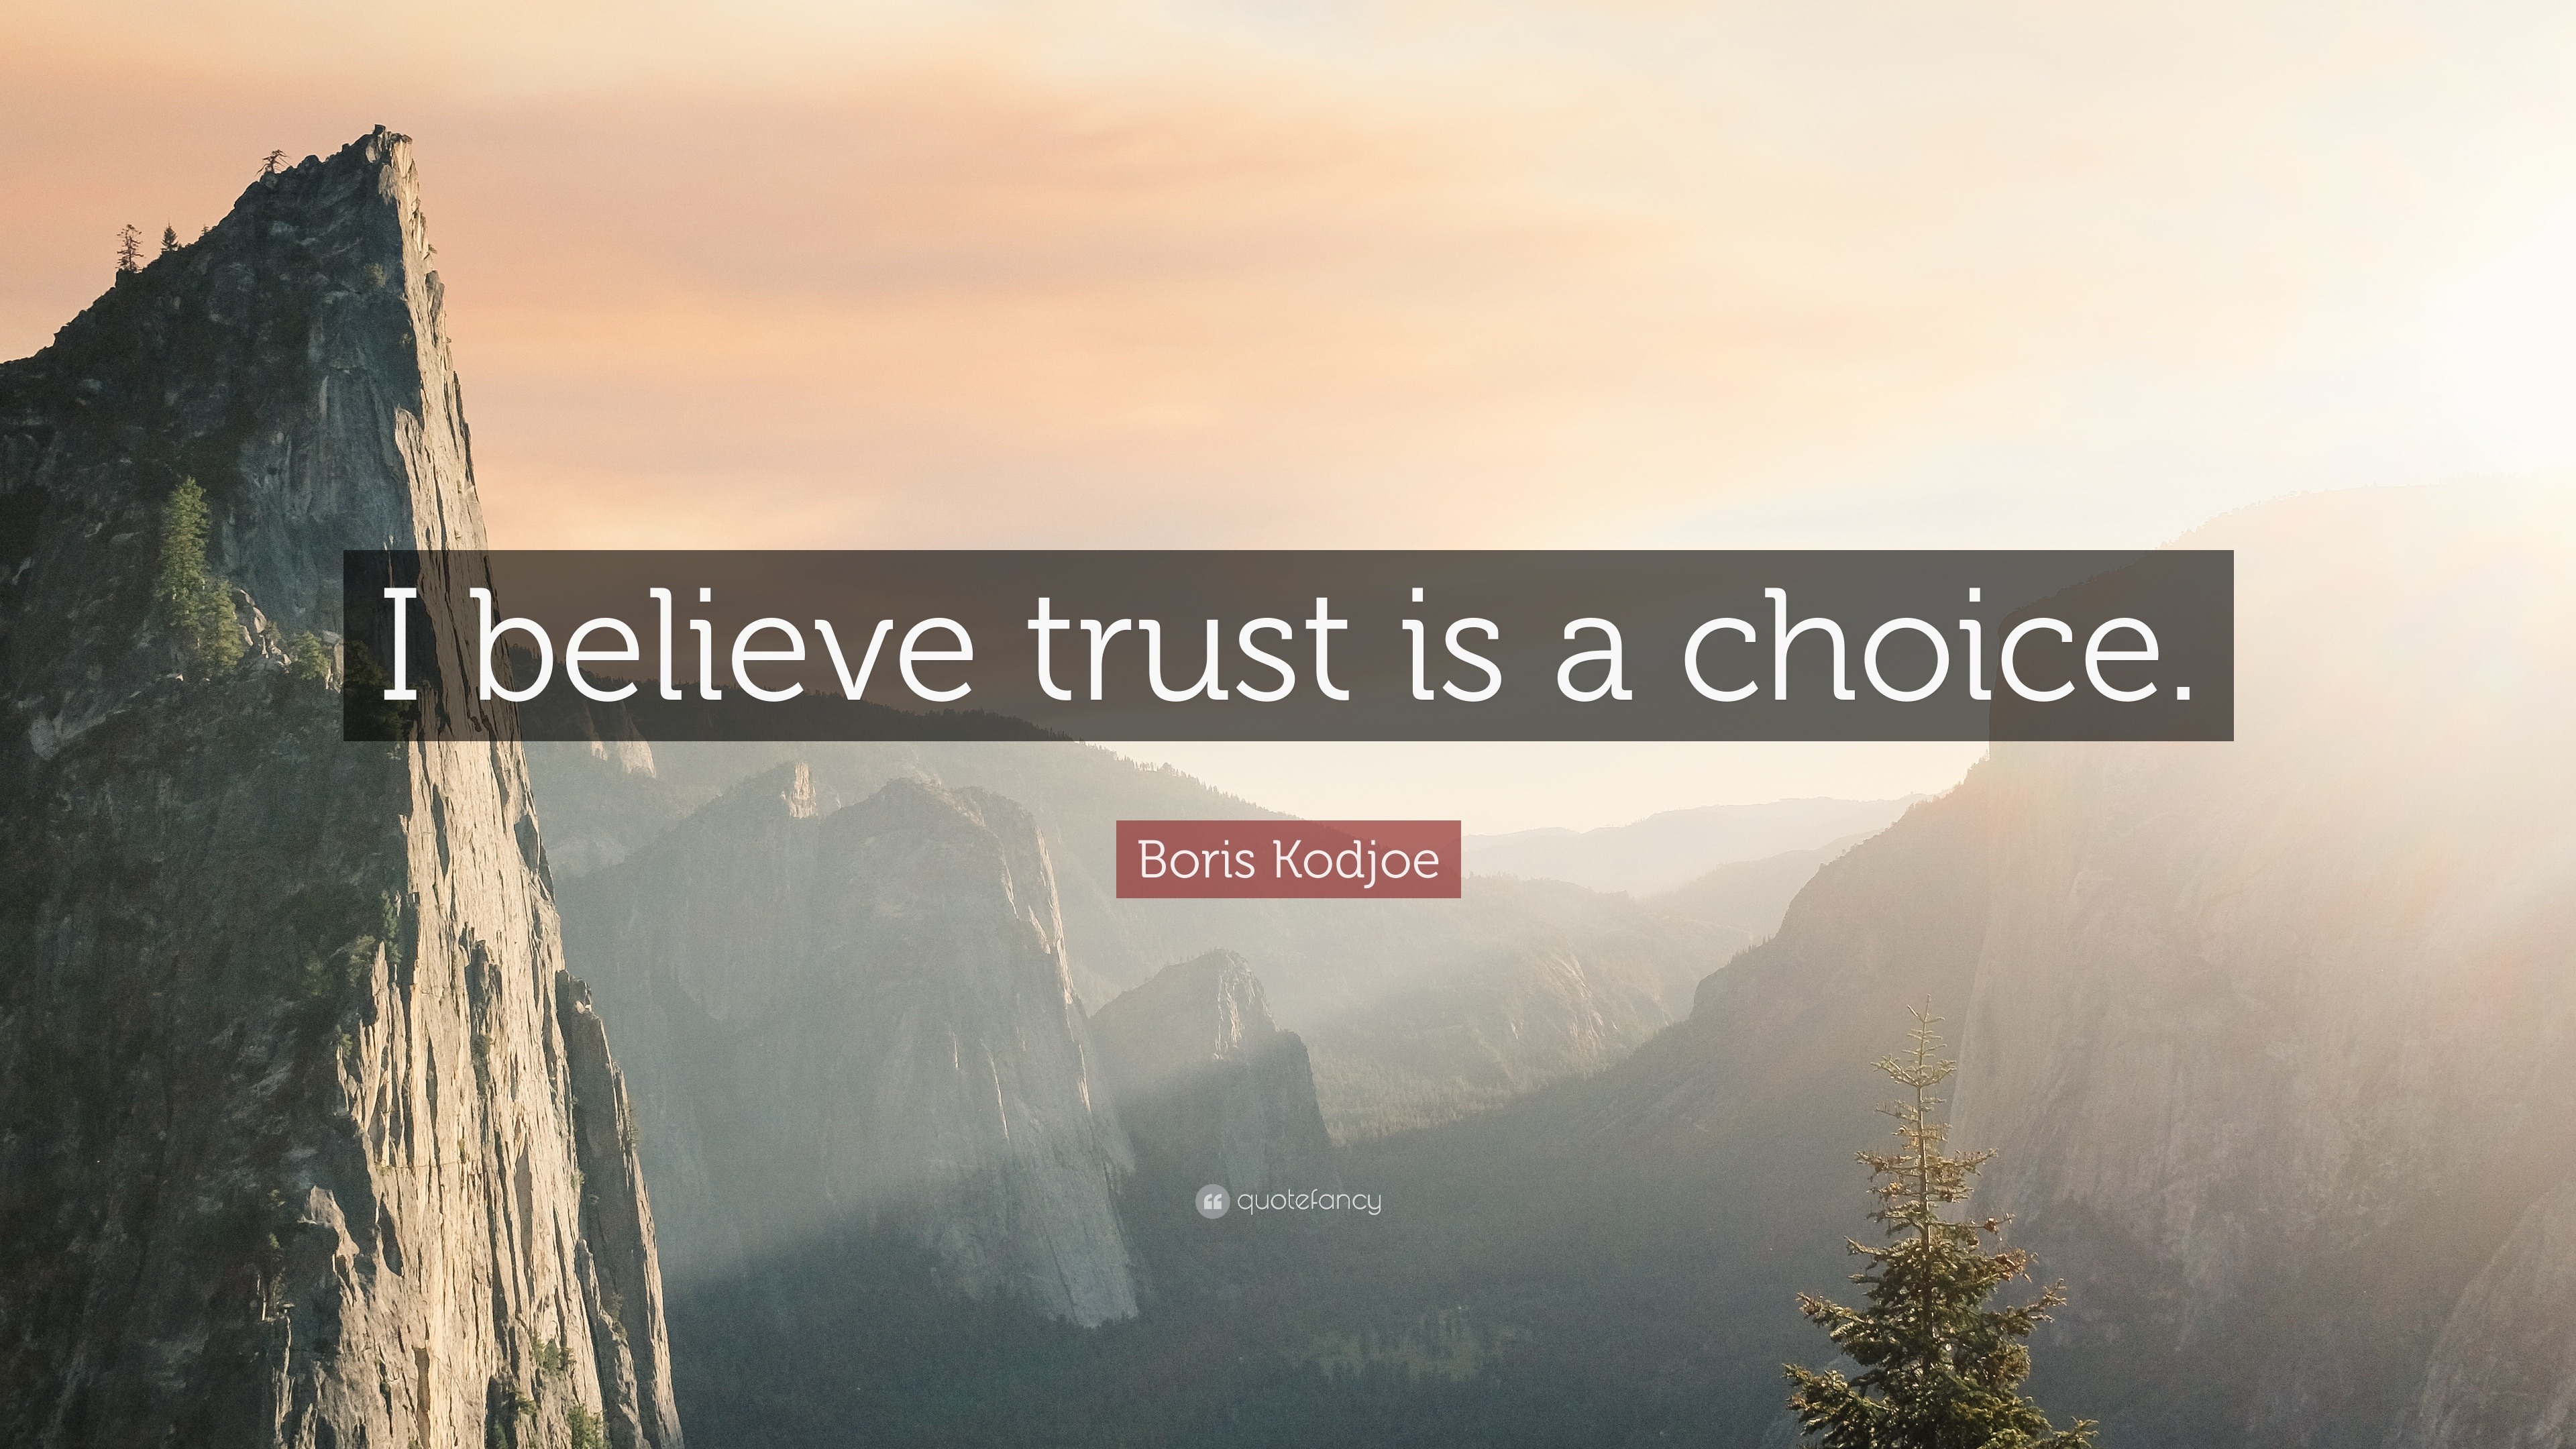 Boris Kodjoe Quote: “I believe trust is a choice.”